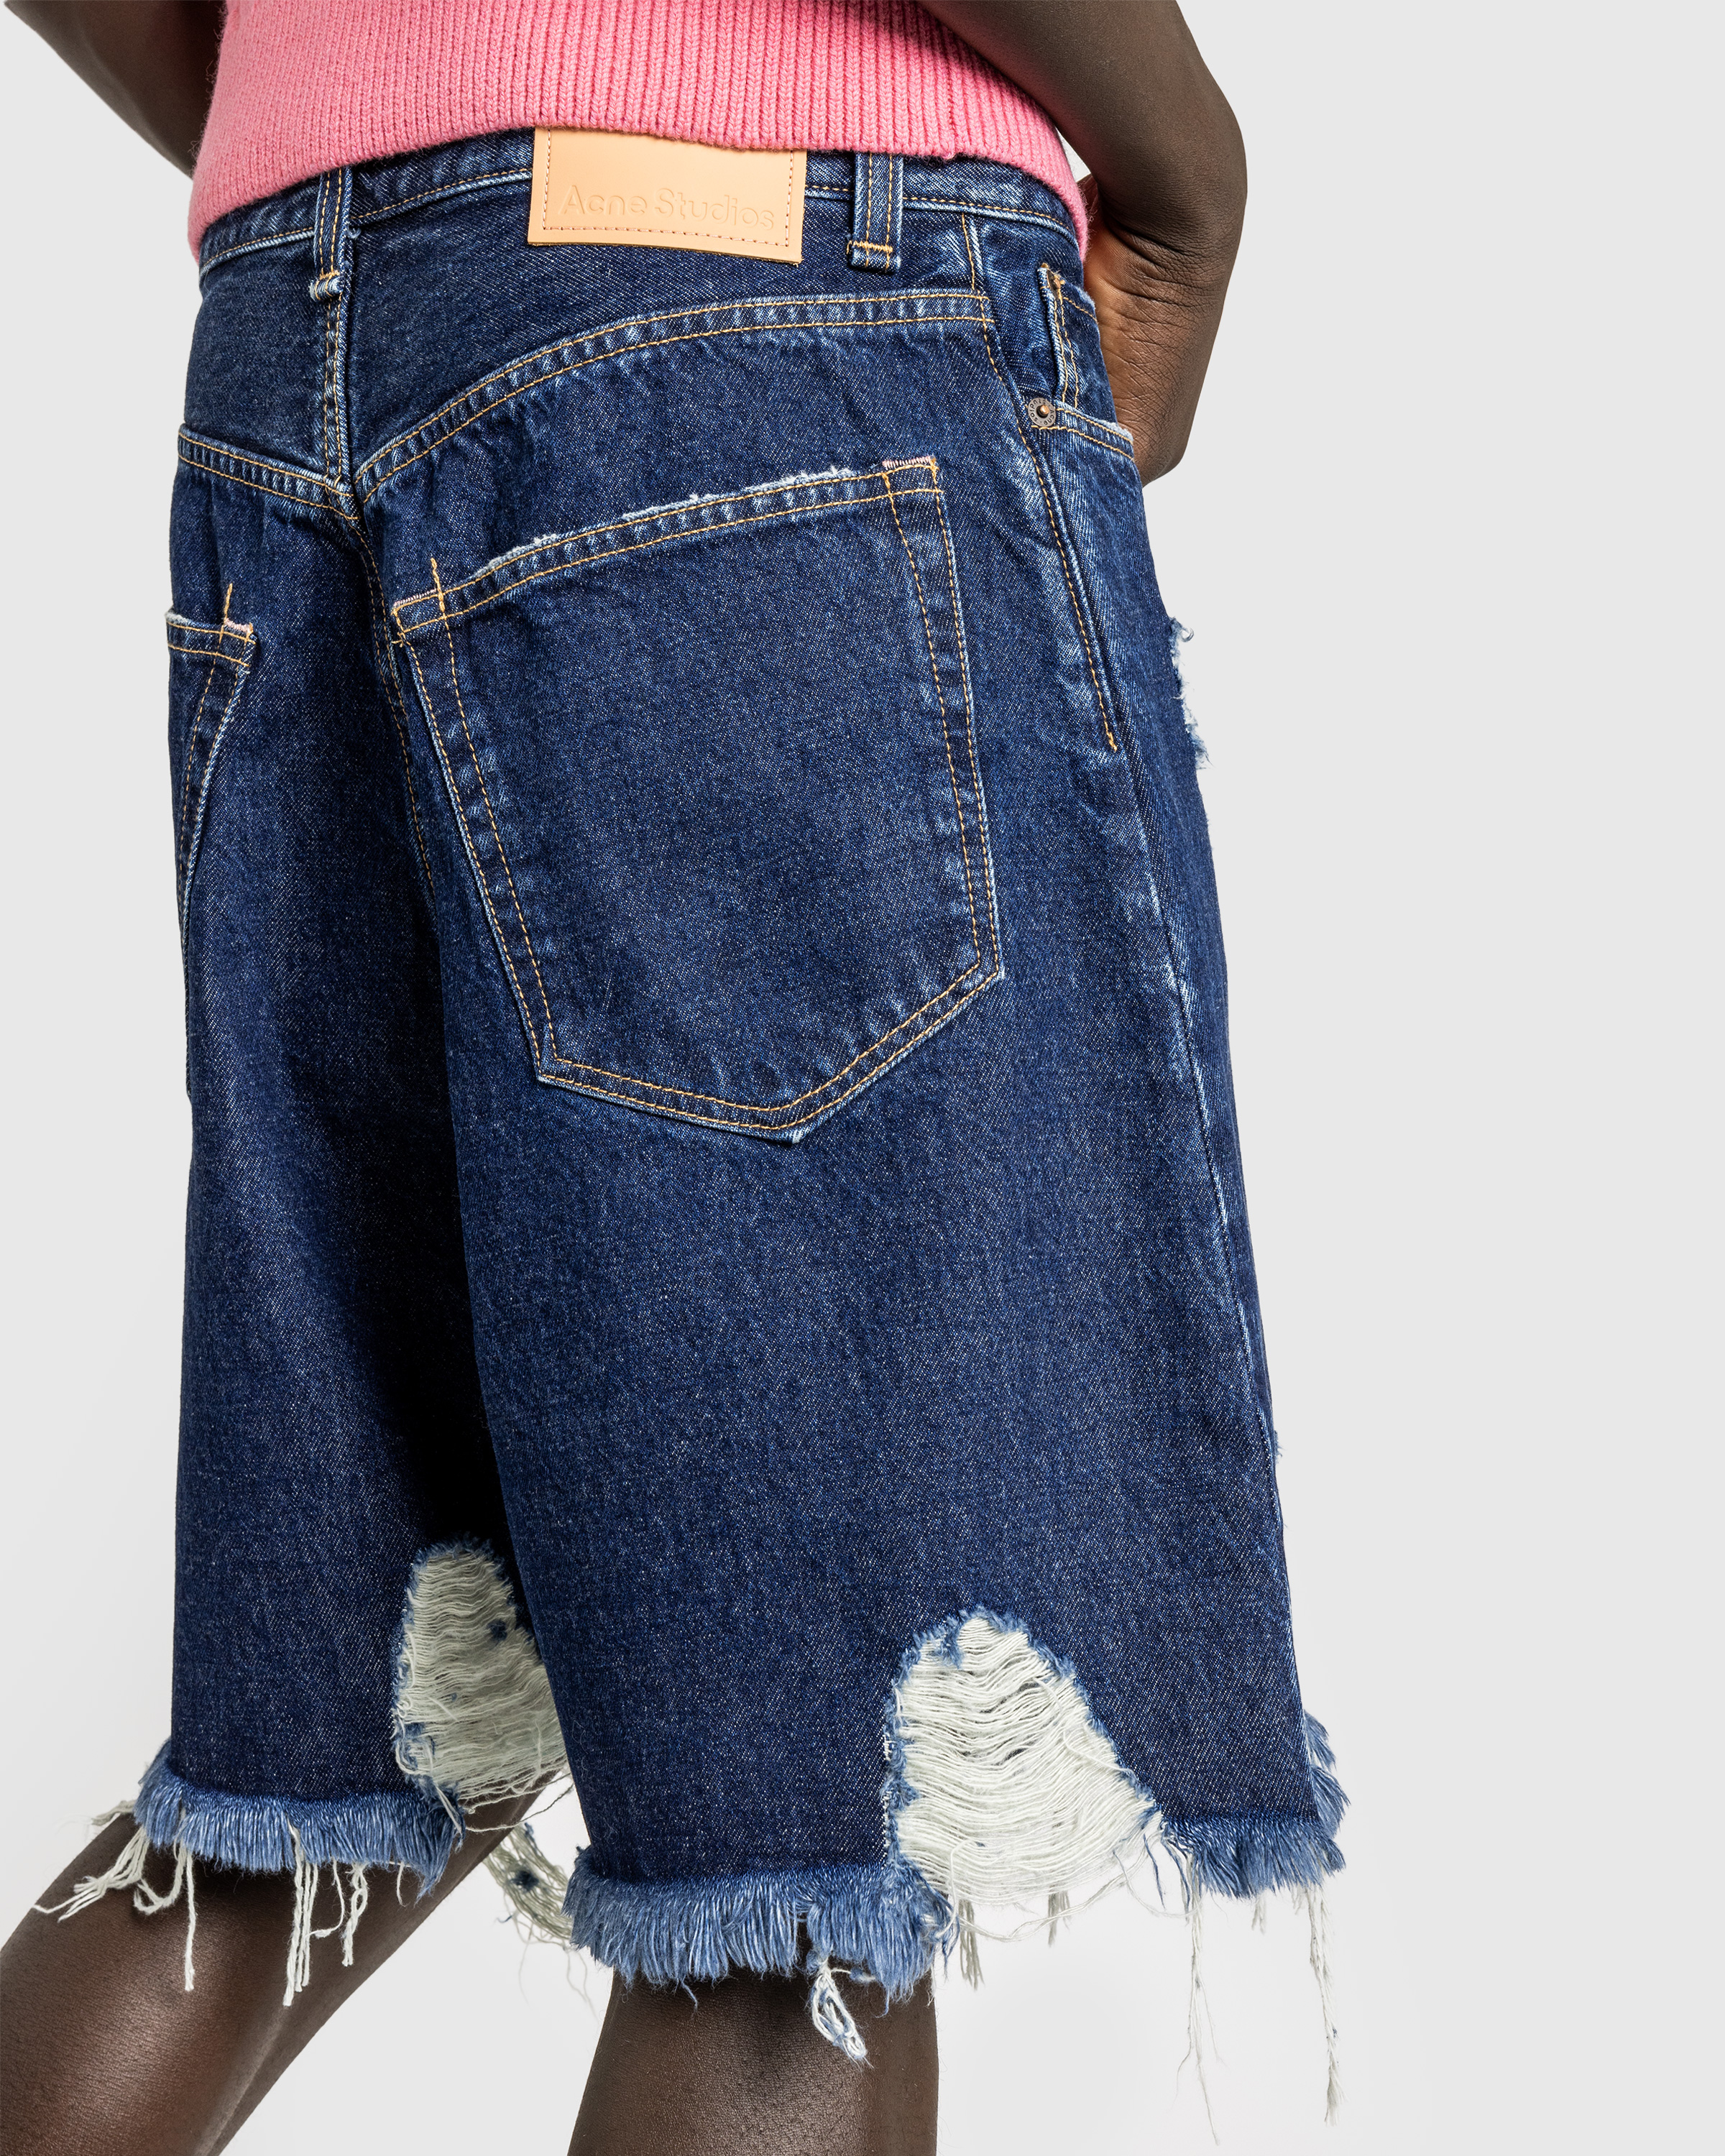 Acne Studios – Distressed Denim Shorts Mid Blue - Cargo Shorts - Blue - Image 5